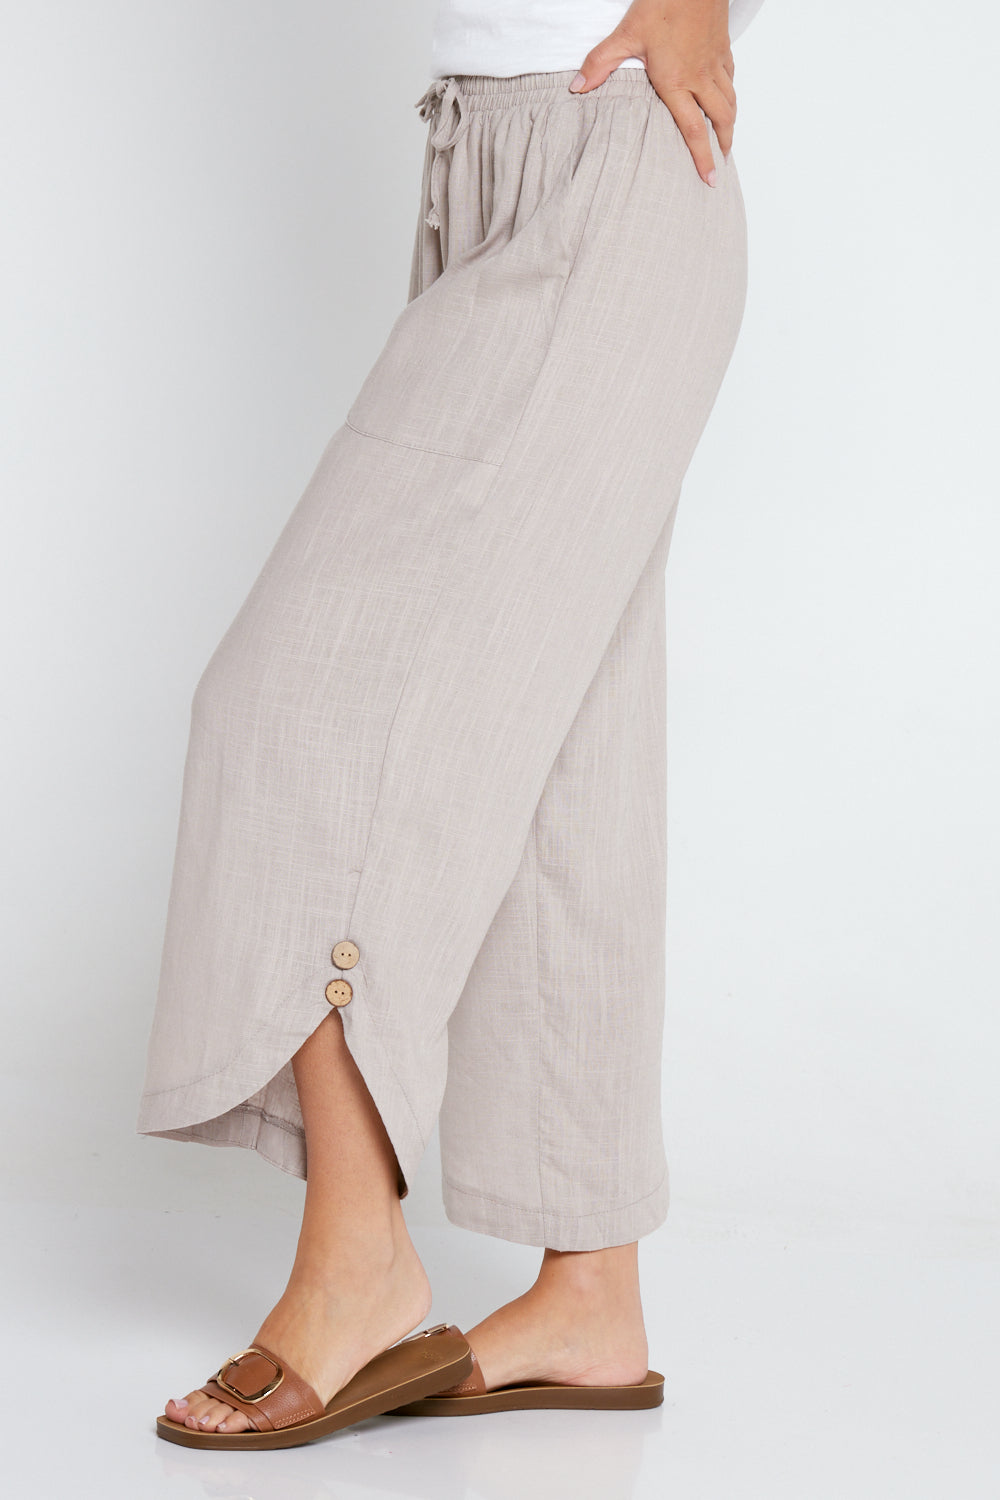 Linen Pants For Women